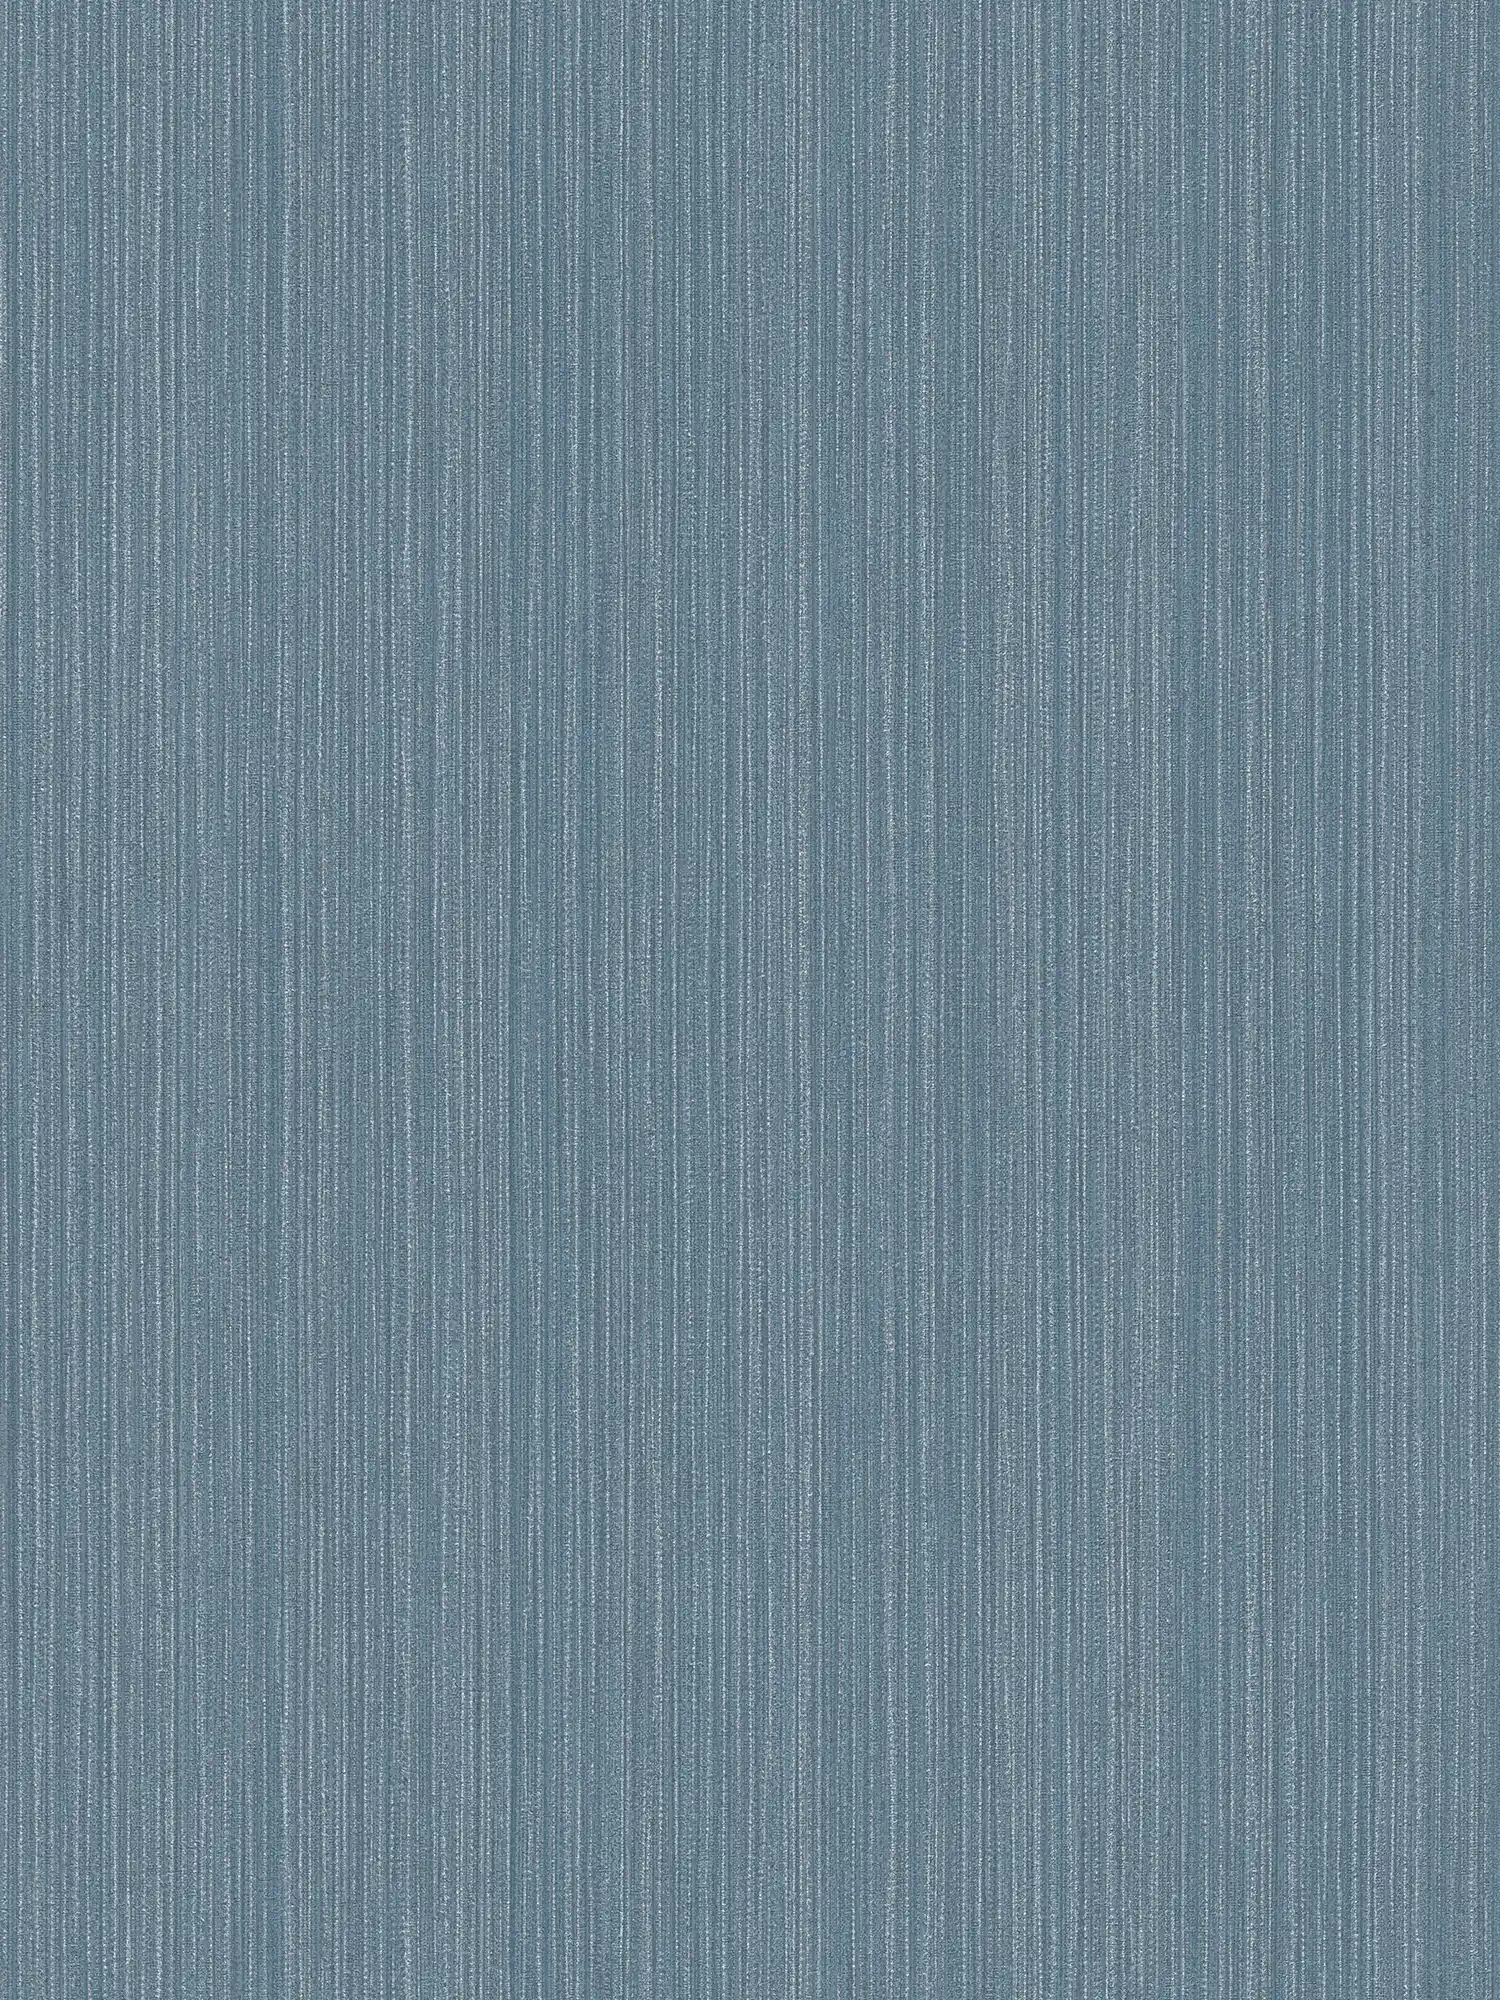 Plain wallpaper with grey-blue textile look - blue, metallic
